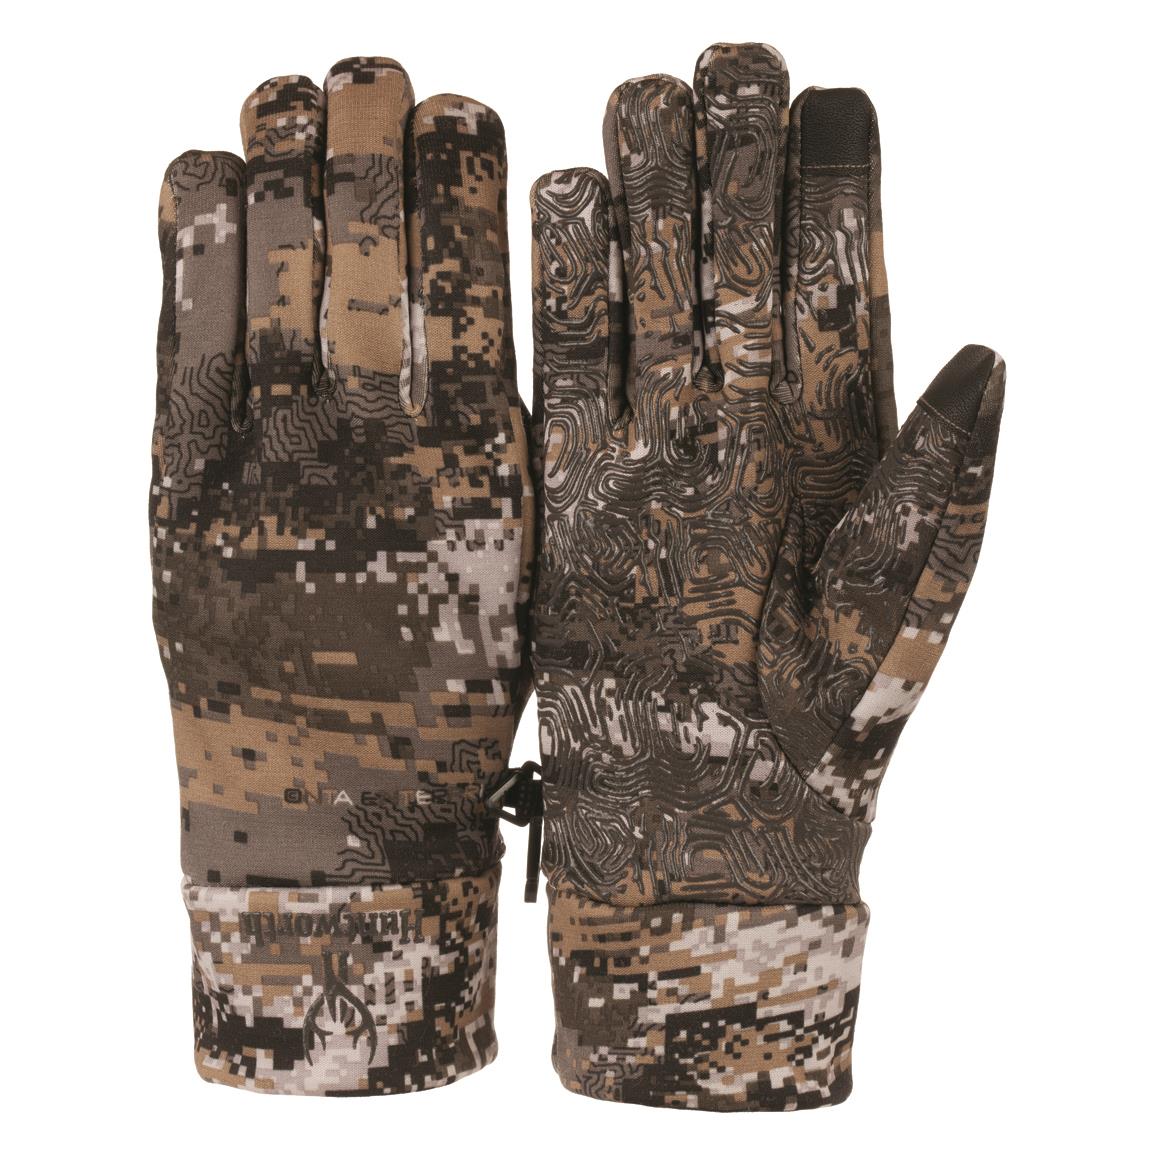 Huntworth Men's Provo Lightweight Hunting Gloves, Disruption